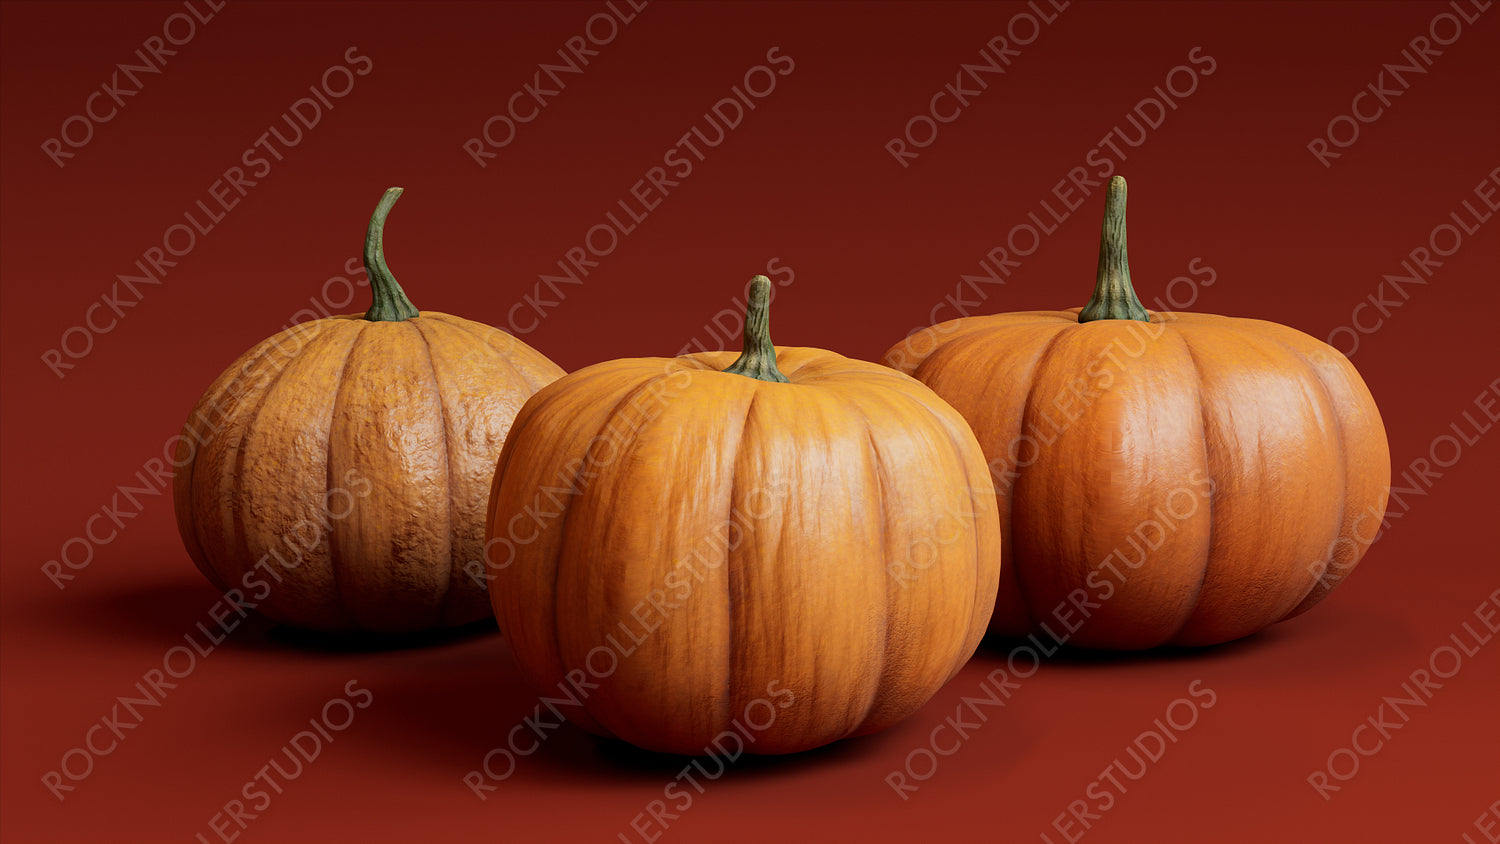 Seasonal background Wallpaper. Trio of Pumpkins on Burnt Orange color. Fall Concept.